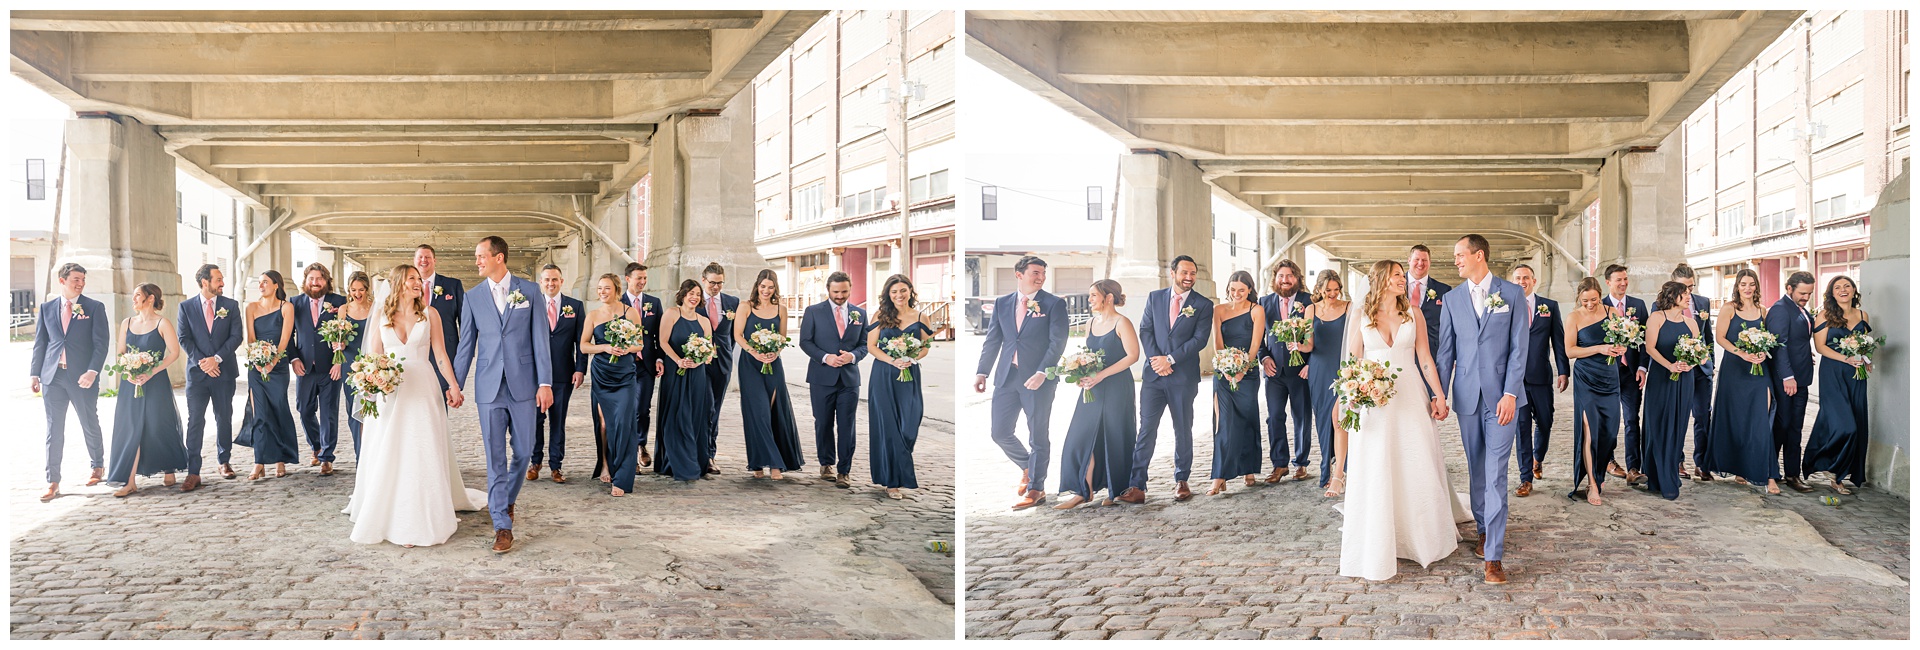 Wedding photography at the 12th Street Bridge by Kansas City wedding photographers Wisdom-Watson Weddings.